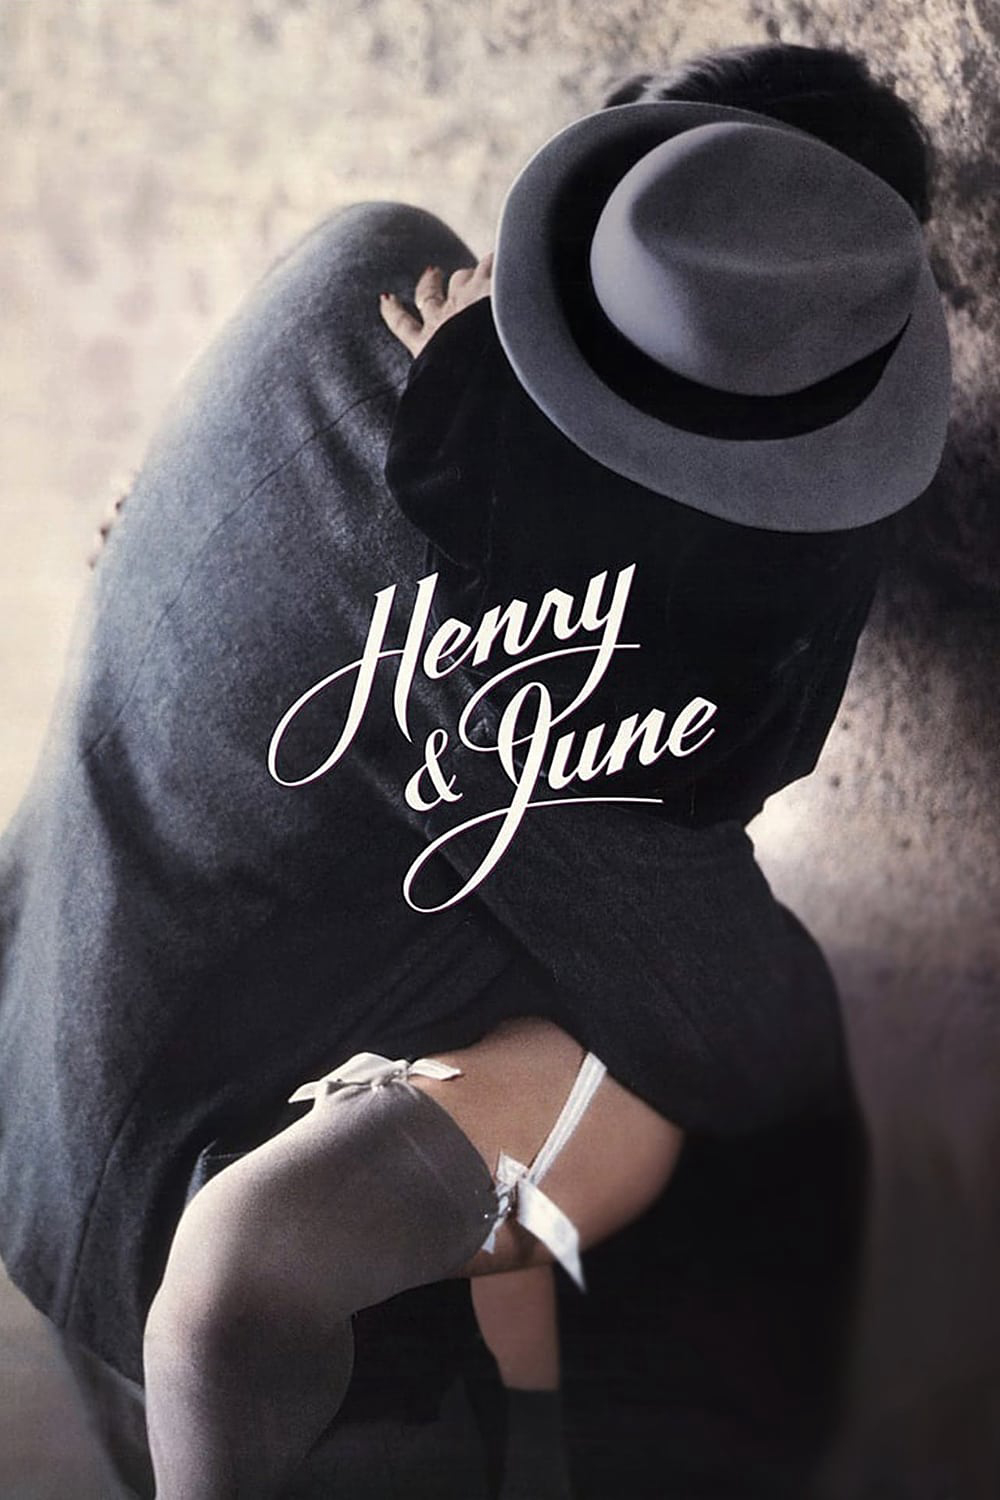 Poster Phim Hnery Gìa Cỗi (Henry & June)